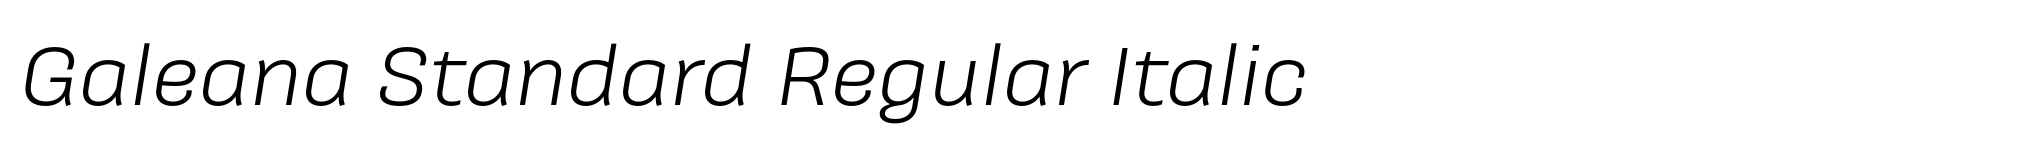 Galeana Standard Regular Italic image